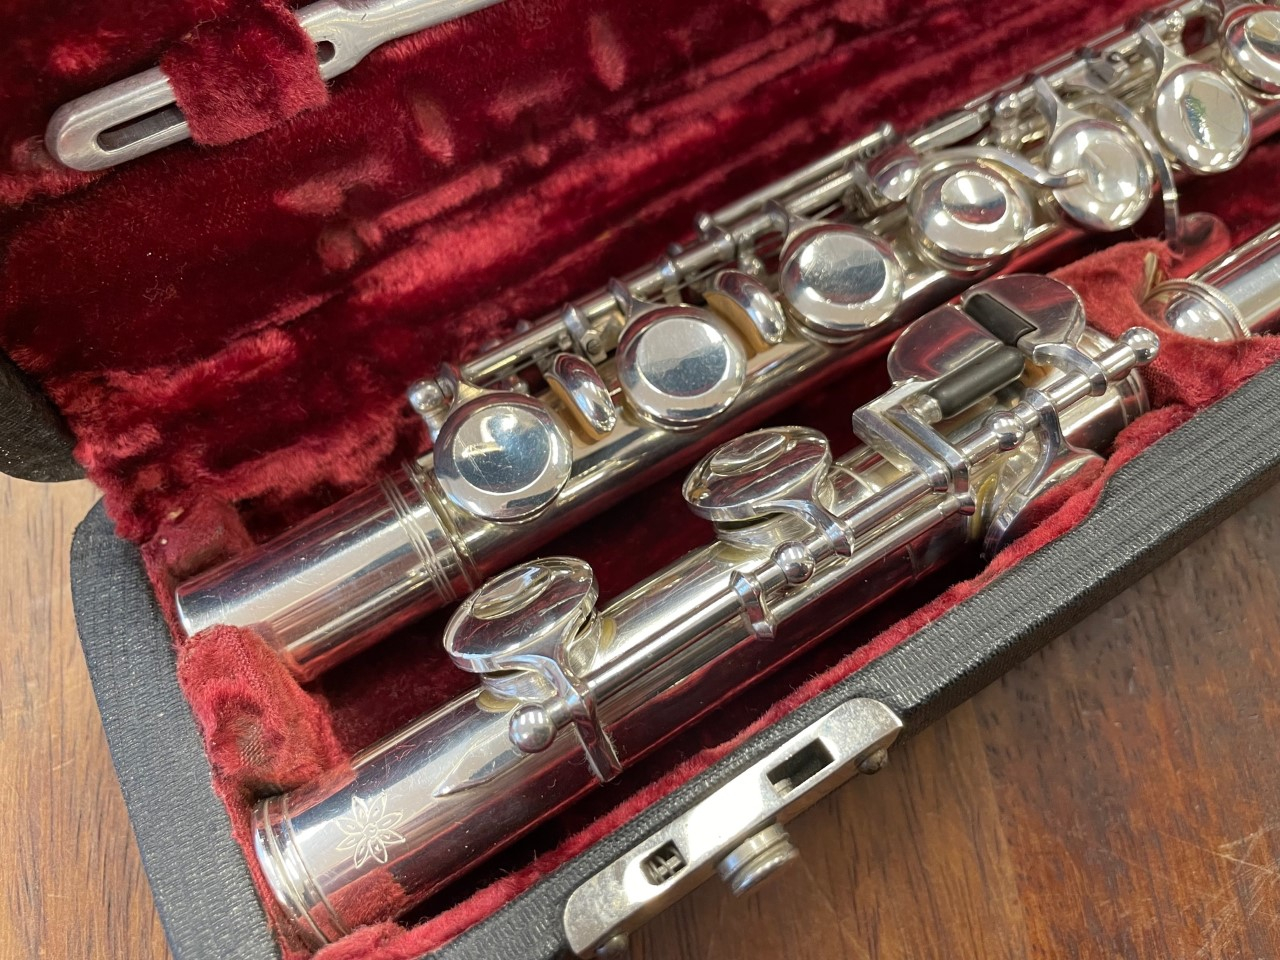 Pre-Owned G. R. Uebel Flute Nr. 2894